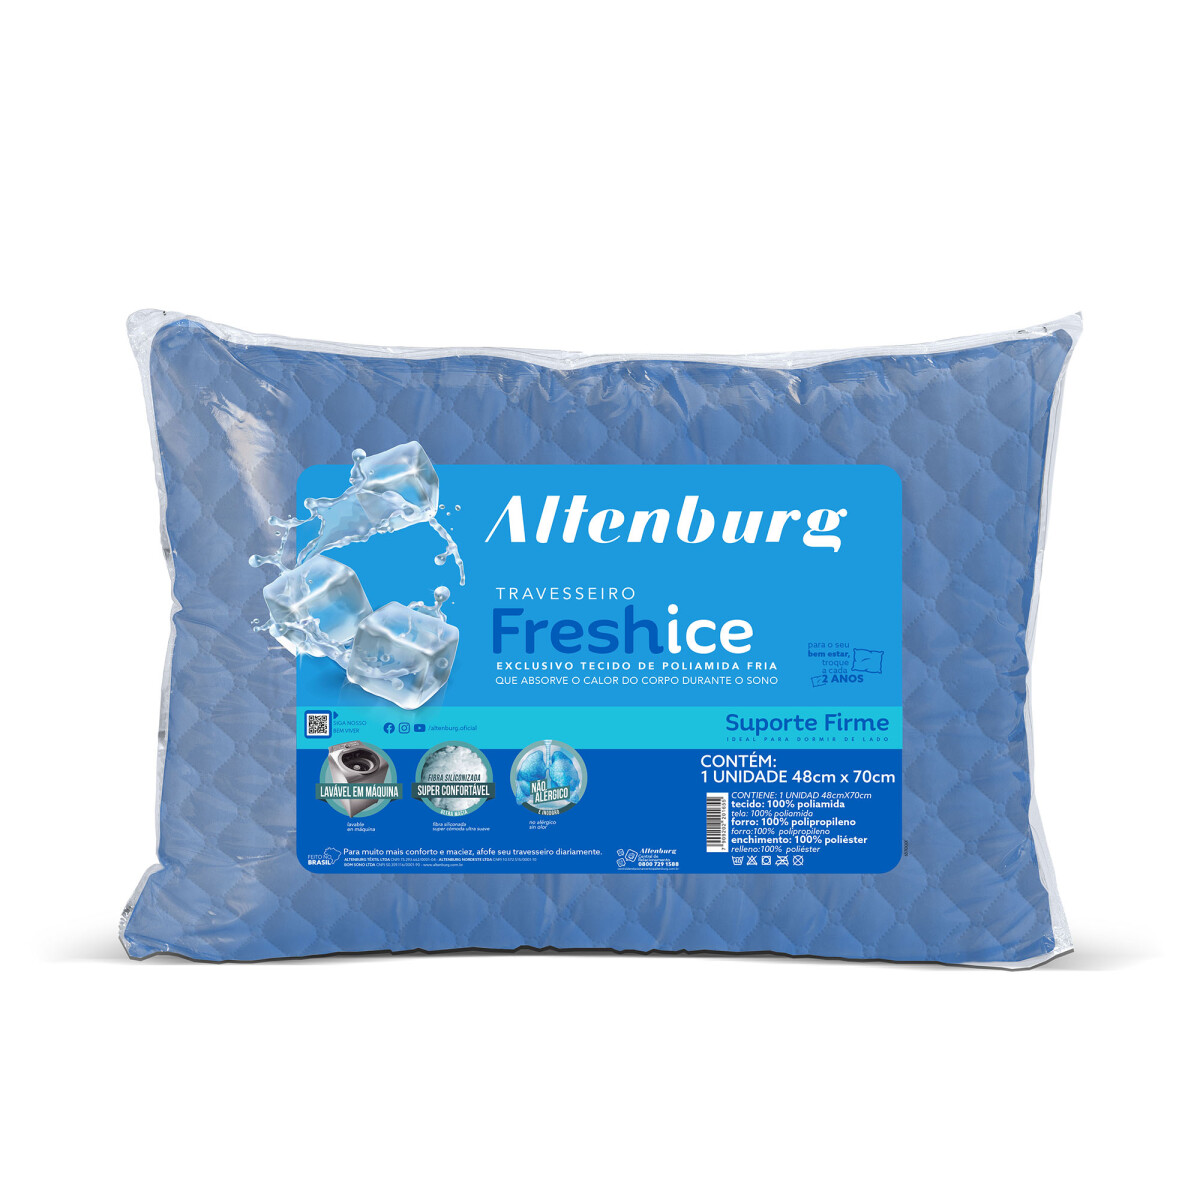 ALTENBURG - FIBRA BLANCO ALMOHADA FRESH ICE 